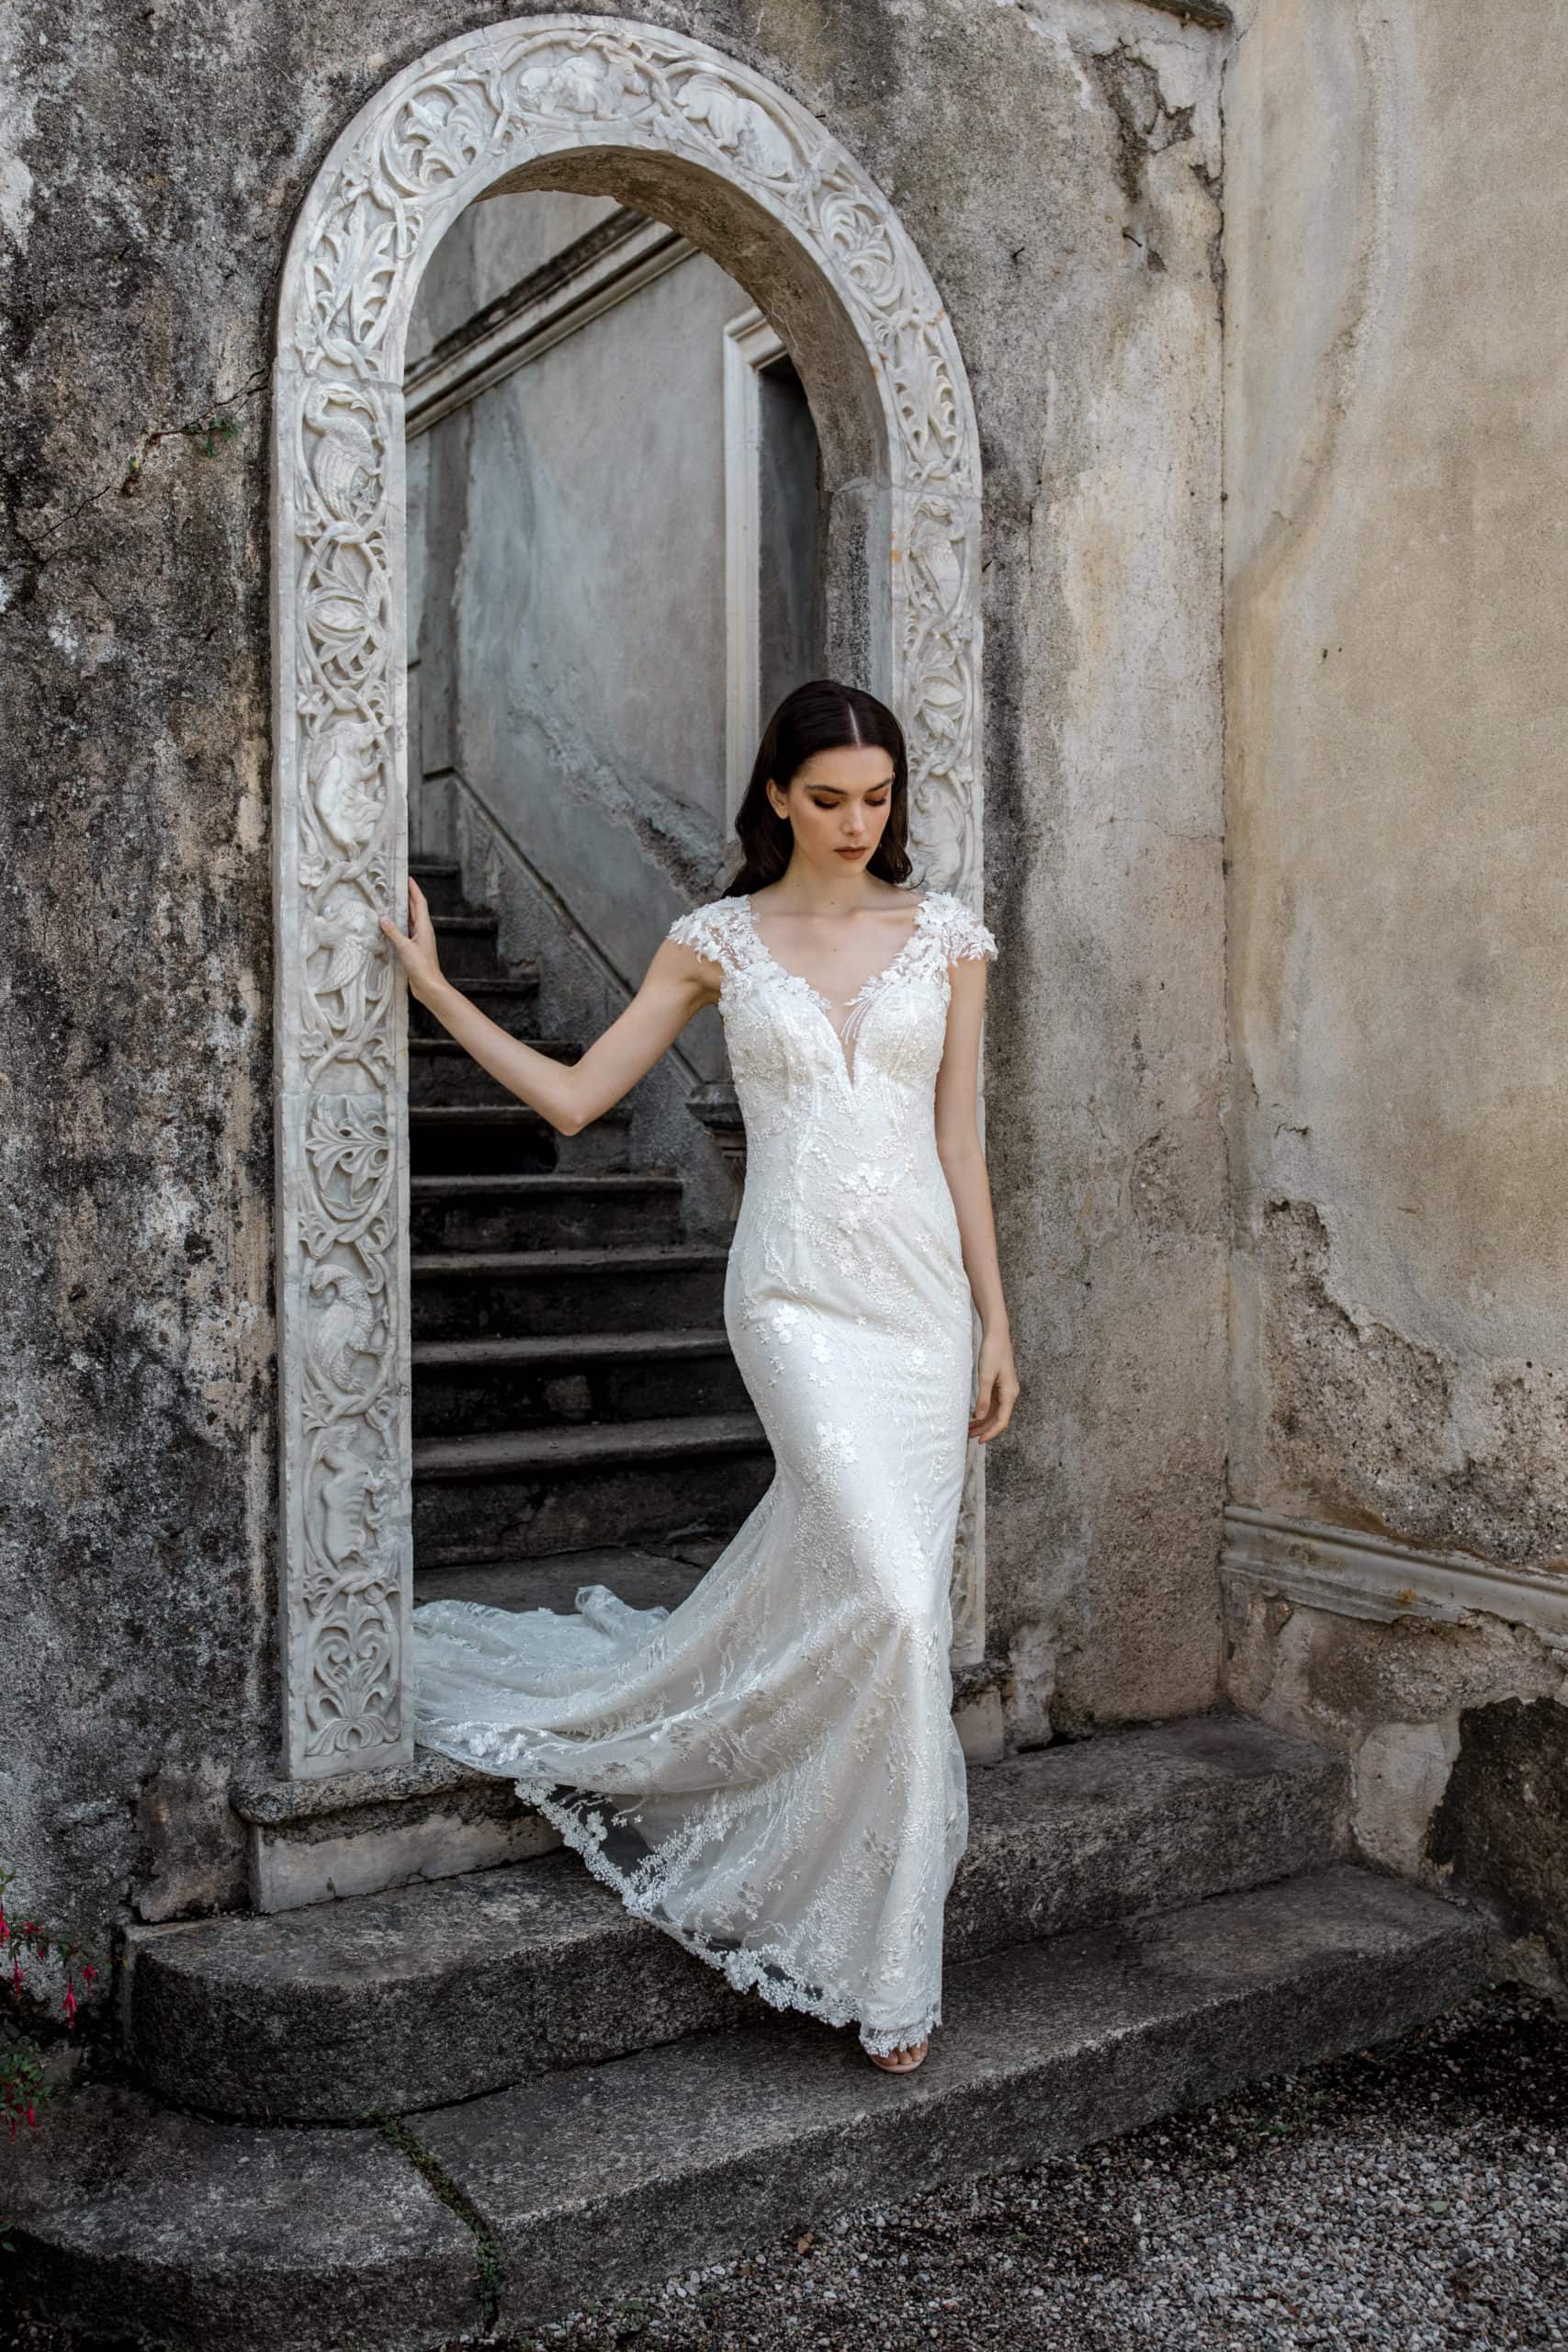 Model steps out of Villa Monastero in lace wedding dress